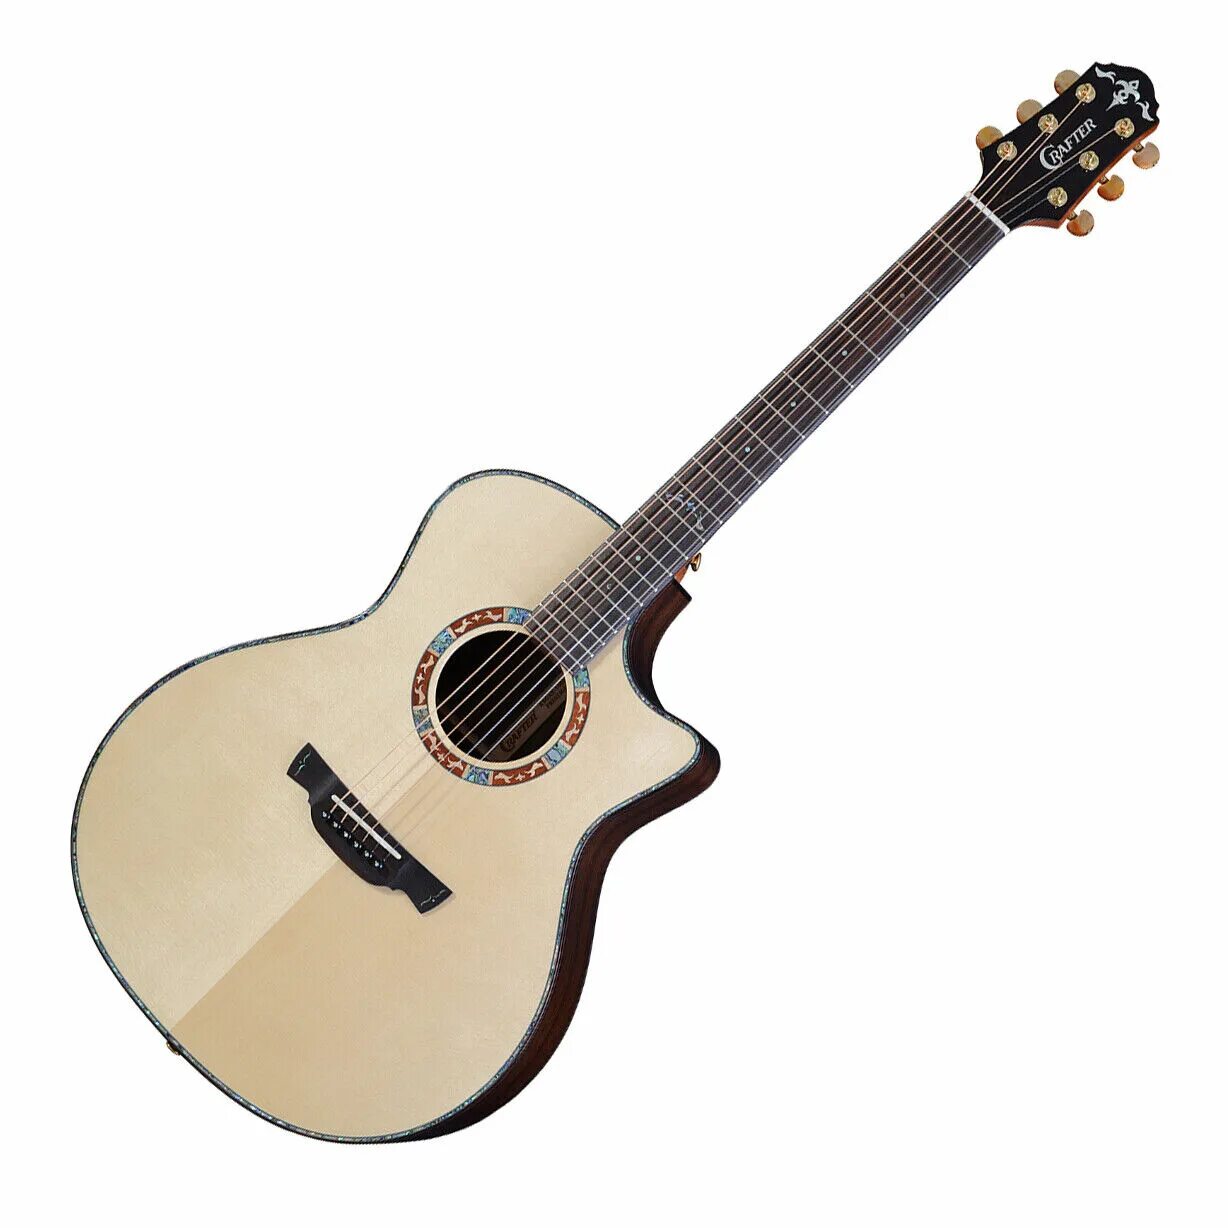 Электроакустическая гитара Crafter HD-250ce. Электроакустическая гитара Crafter ml g-1000ce. Rockdale Aurora d1 c n. Акустическая гитара lag Tramontane t318a.